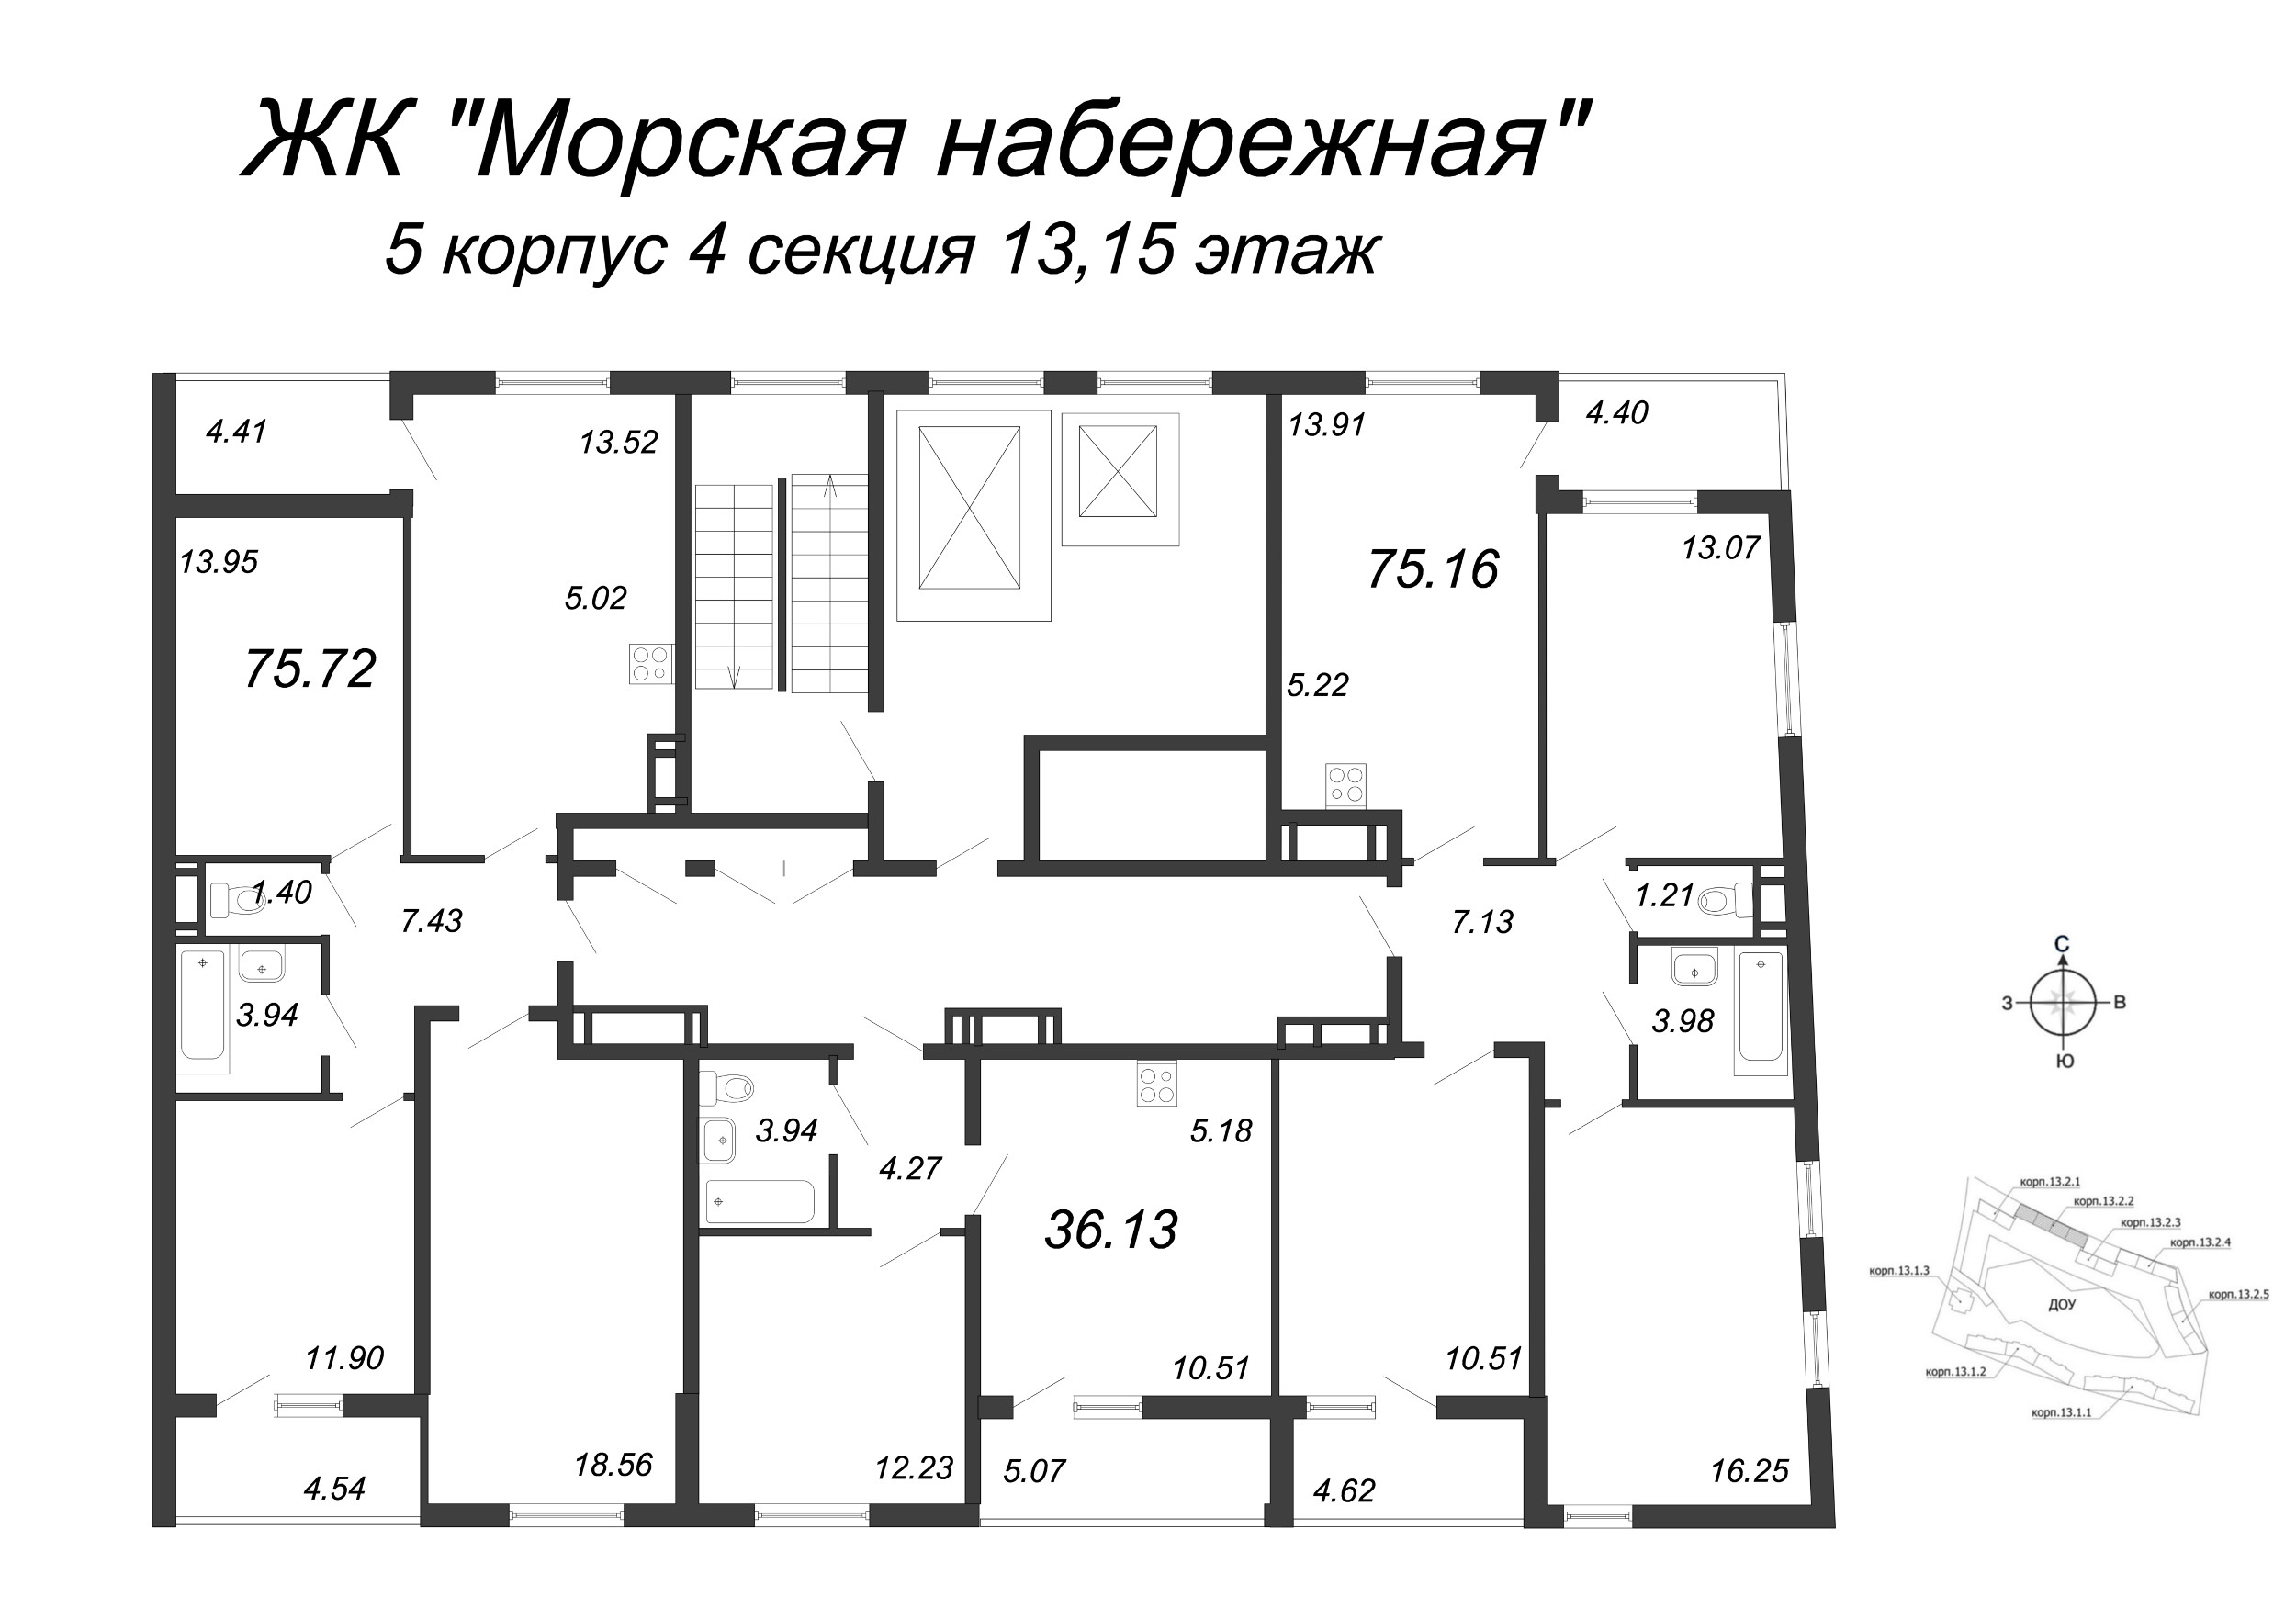 4-комнатная (Евро) квартира, 79.8 м² - планировка этажа